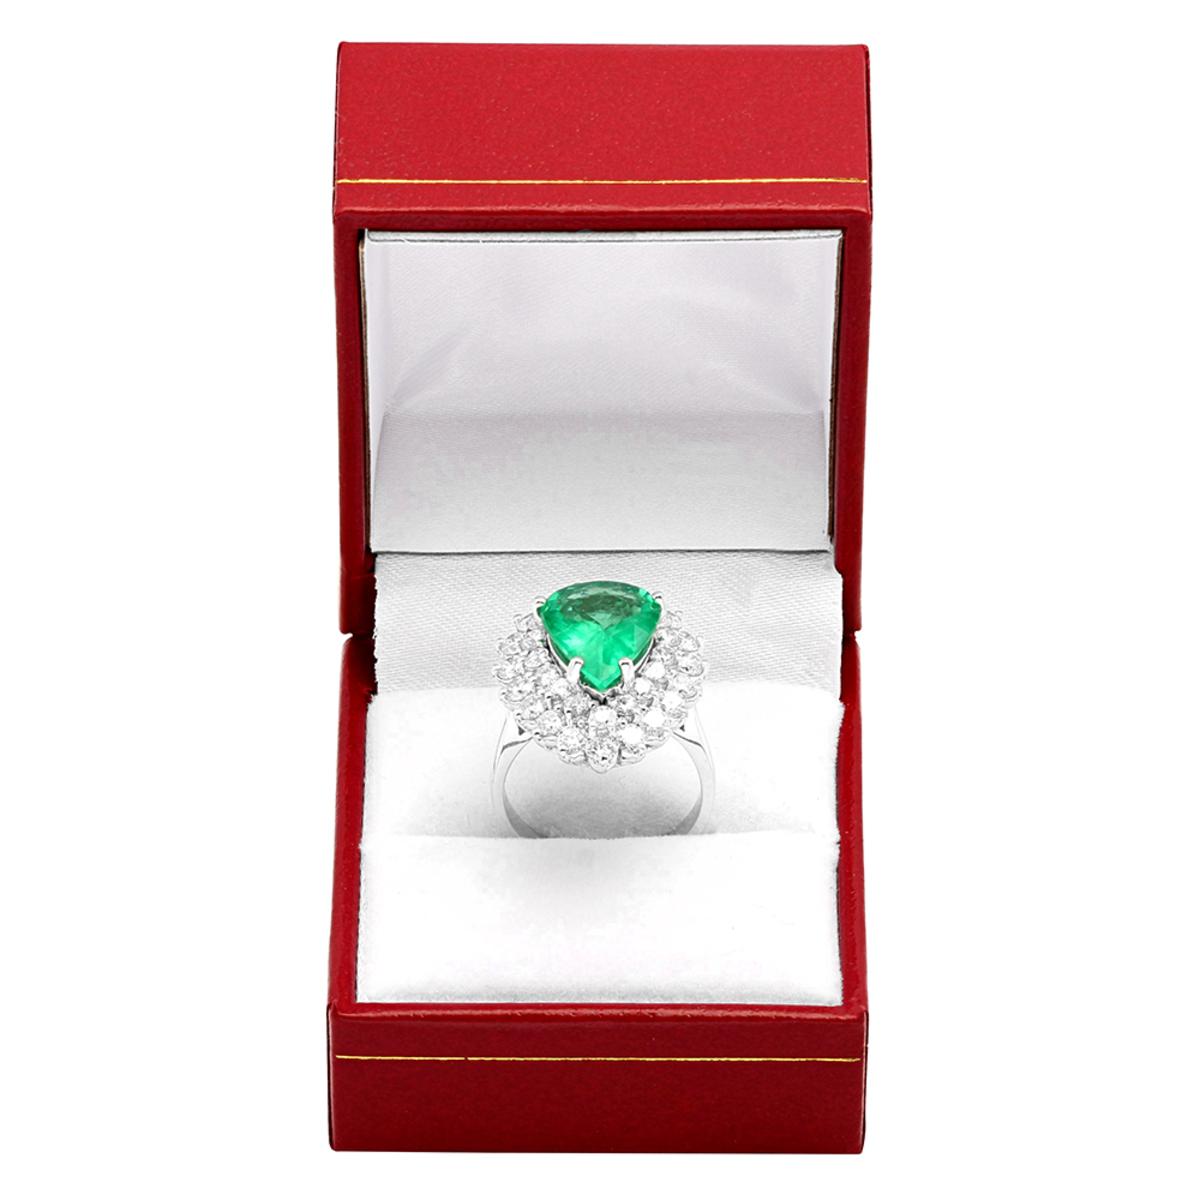 14k White Gold 4.92ct Emerald 2.66ct Diamond Ring